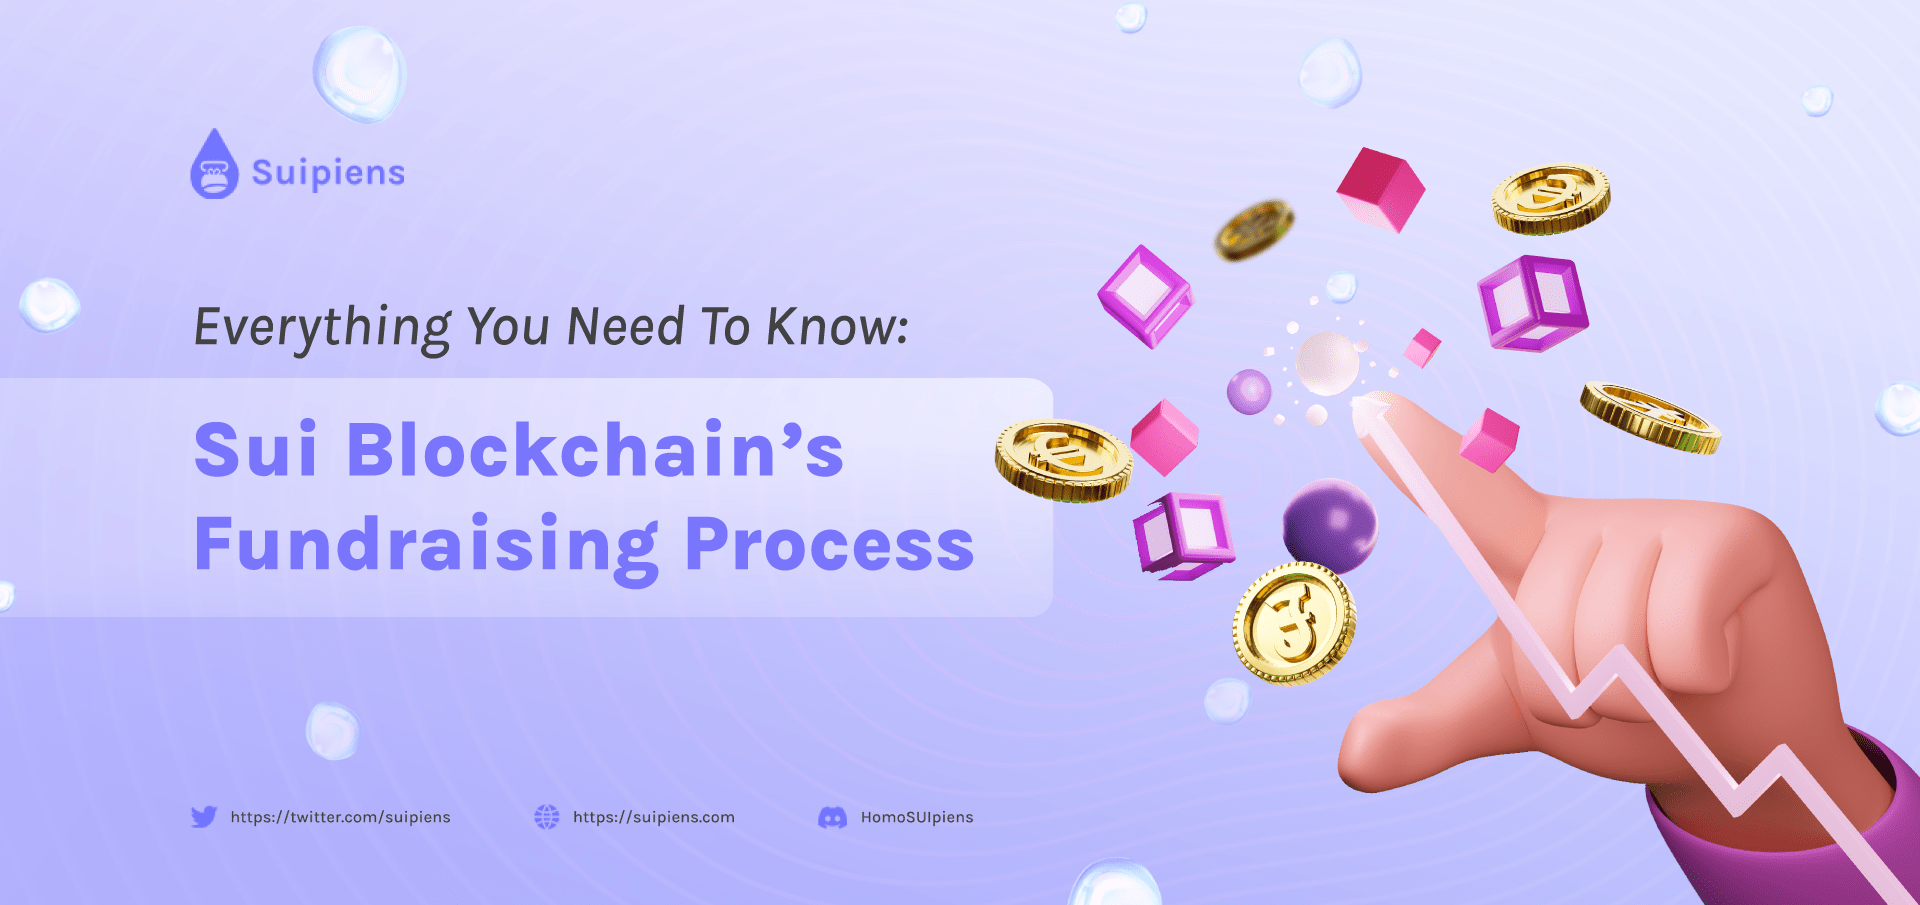 Sui Blockchain’s Fundraising Process